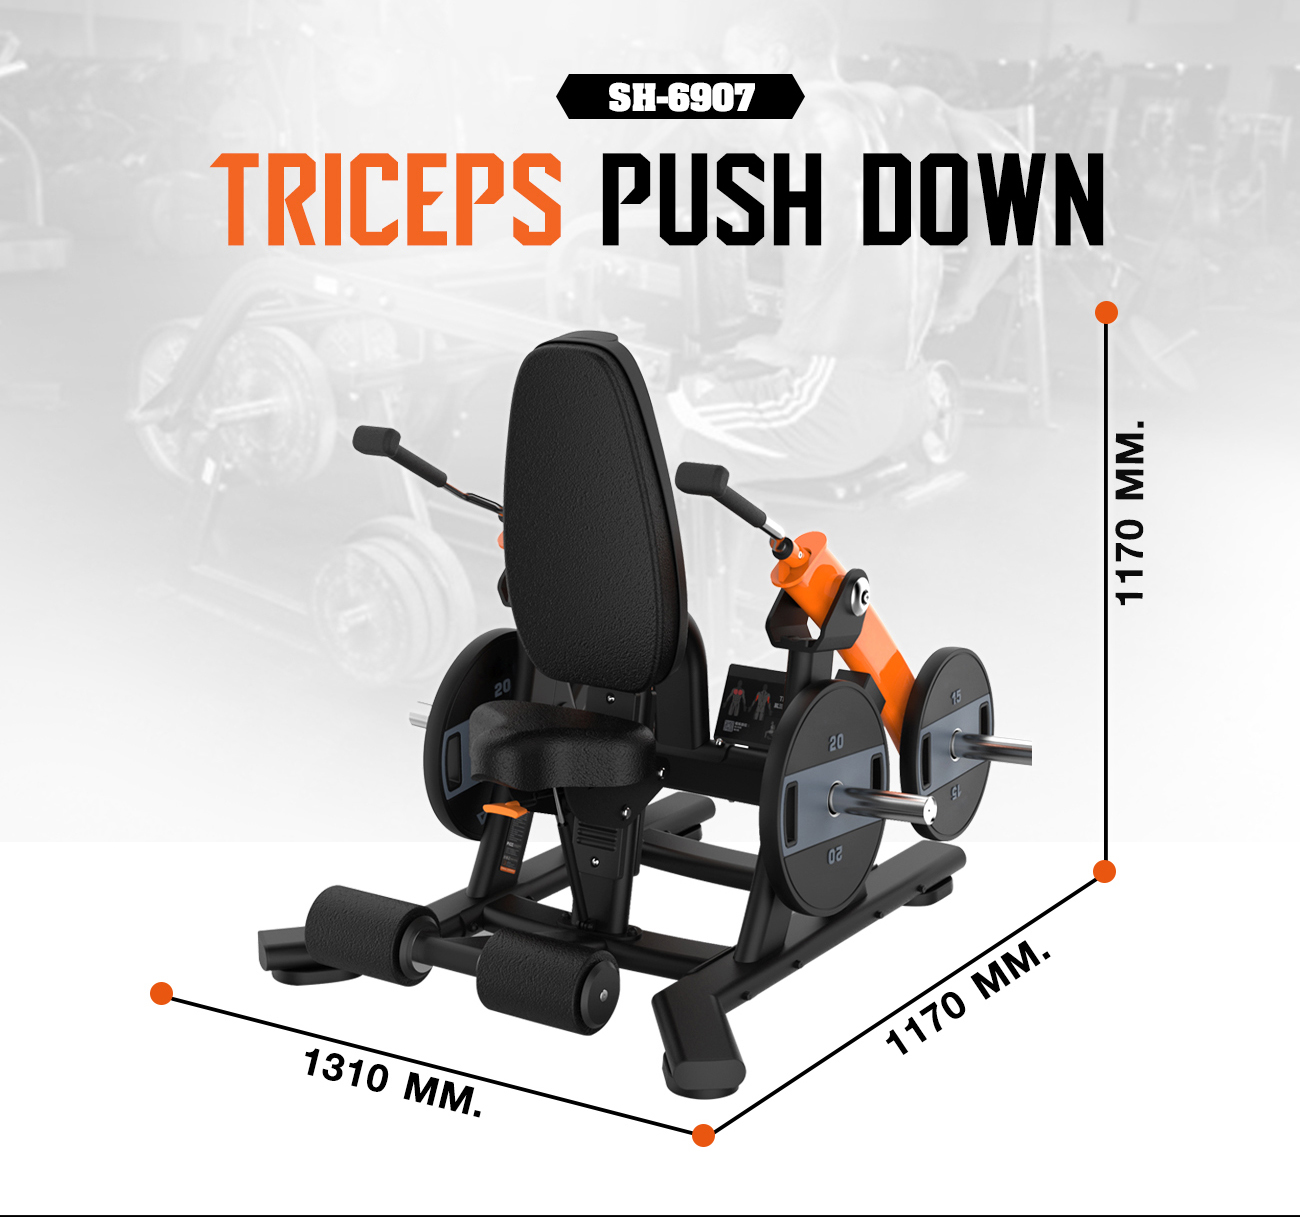 Triceps push down เครื่องบริหารกล้ามเนื้อต้นแขนด้านหลังSH-6907